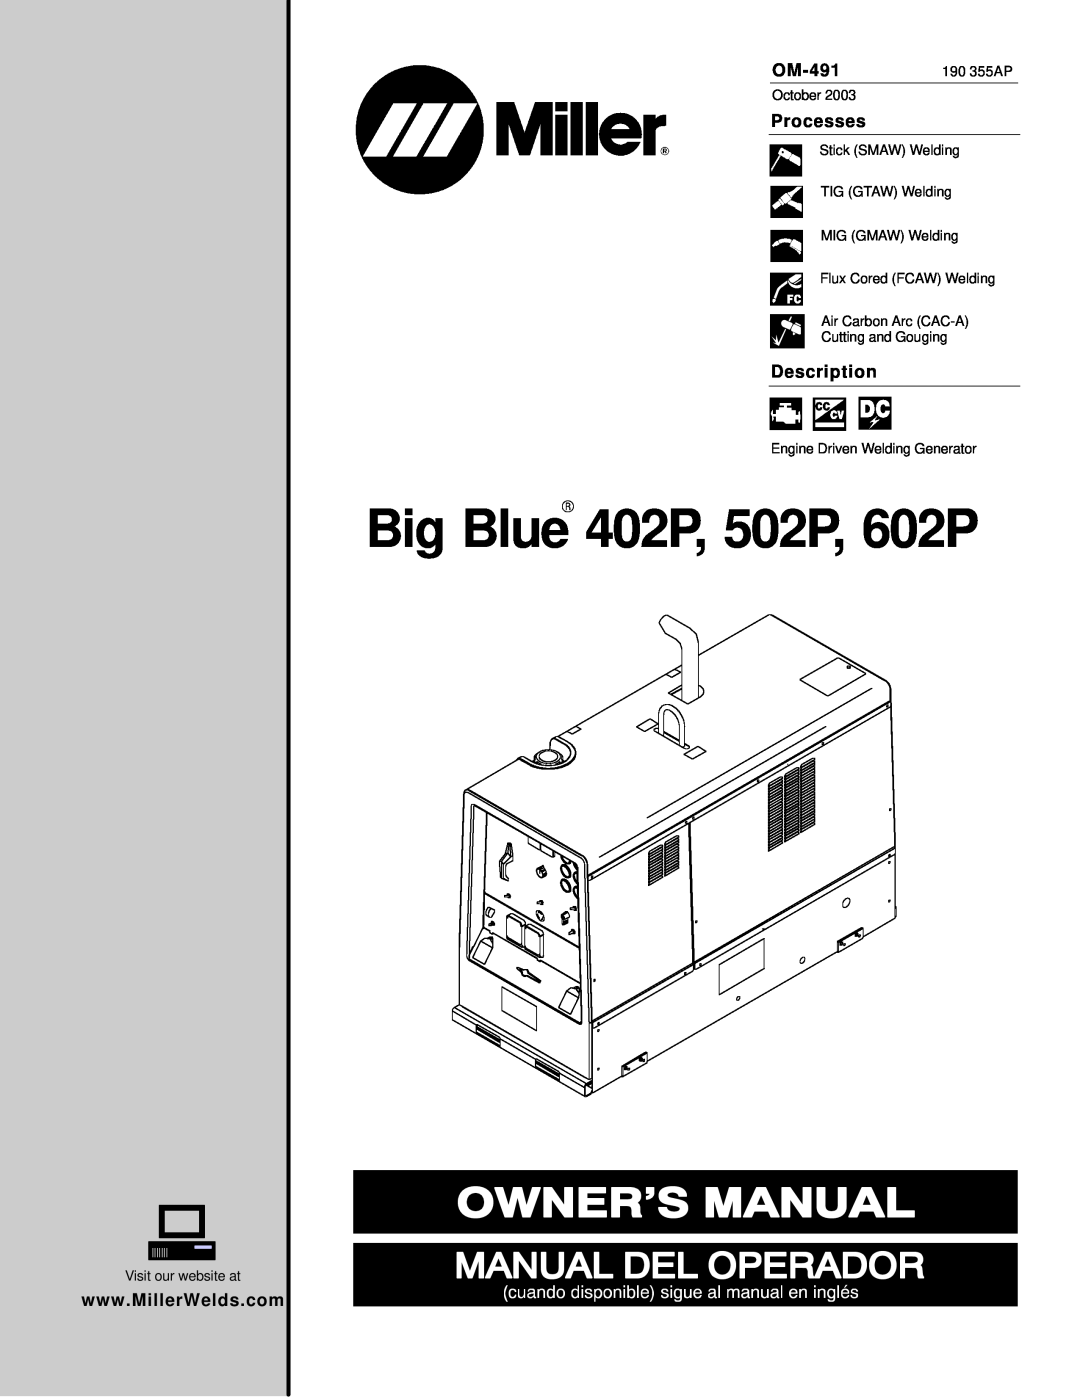 Miller Electric Big Blue 602P, Big Blue 402P manual Big BlueR 402P, 502P, 602P, OM-491, Processes, Description 